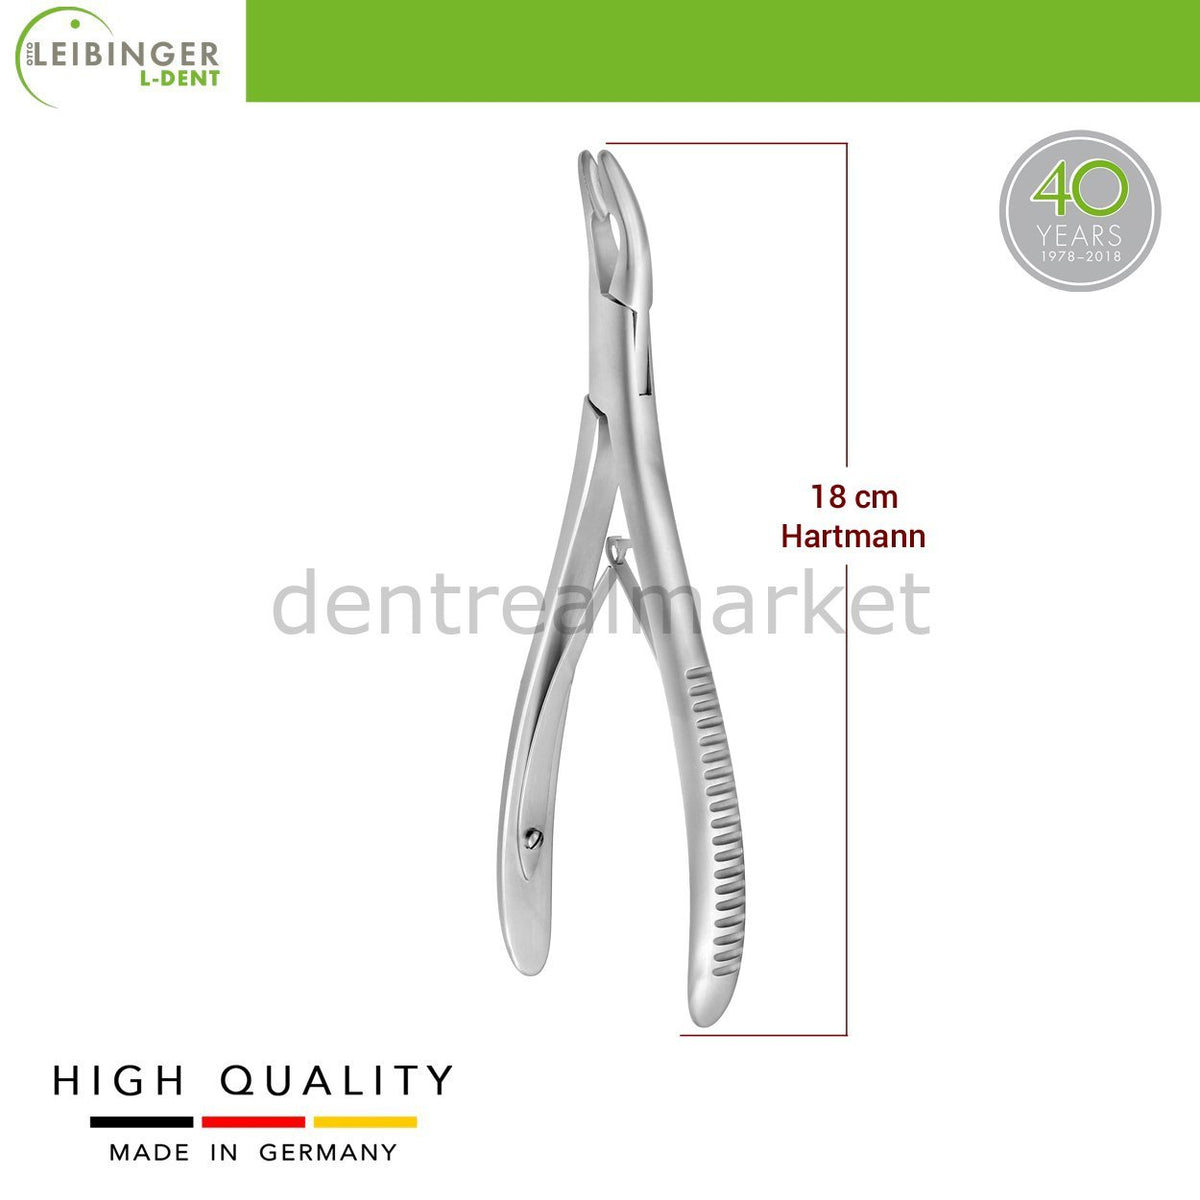 DentrealStore - Leibinger Hartmann Bone Rongeur - Dental Bone Rongeur - 18 cm